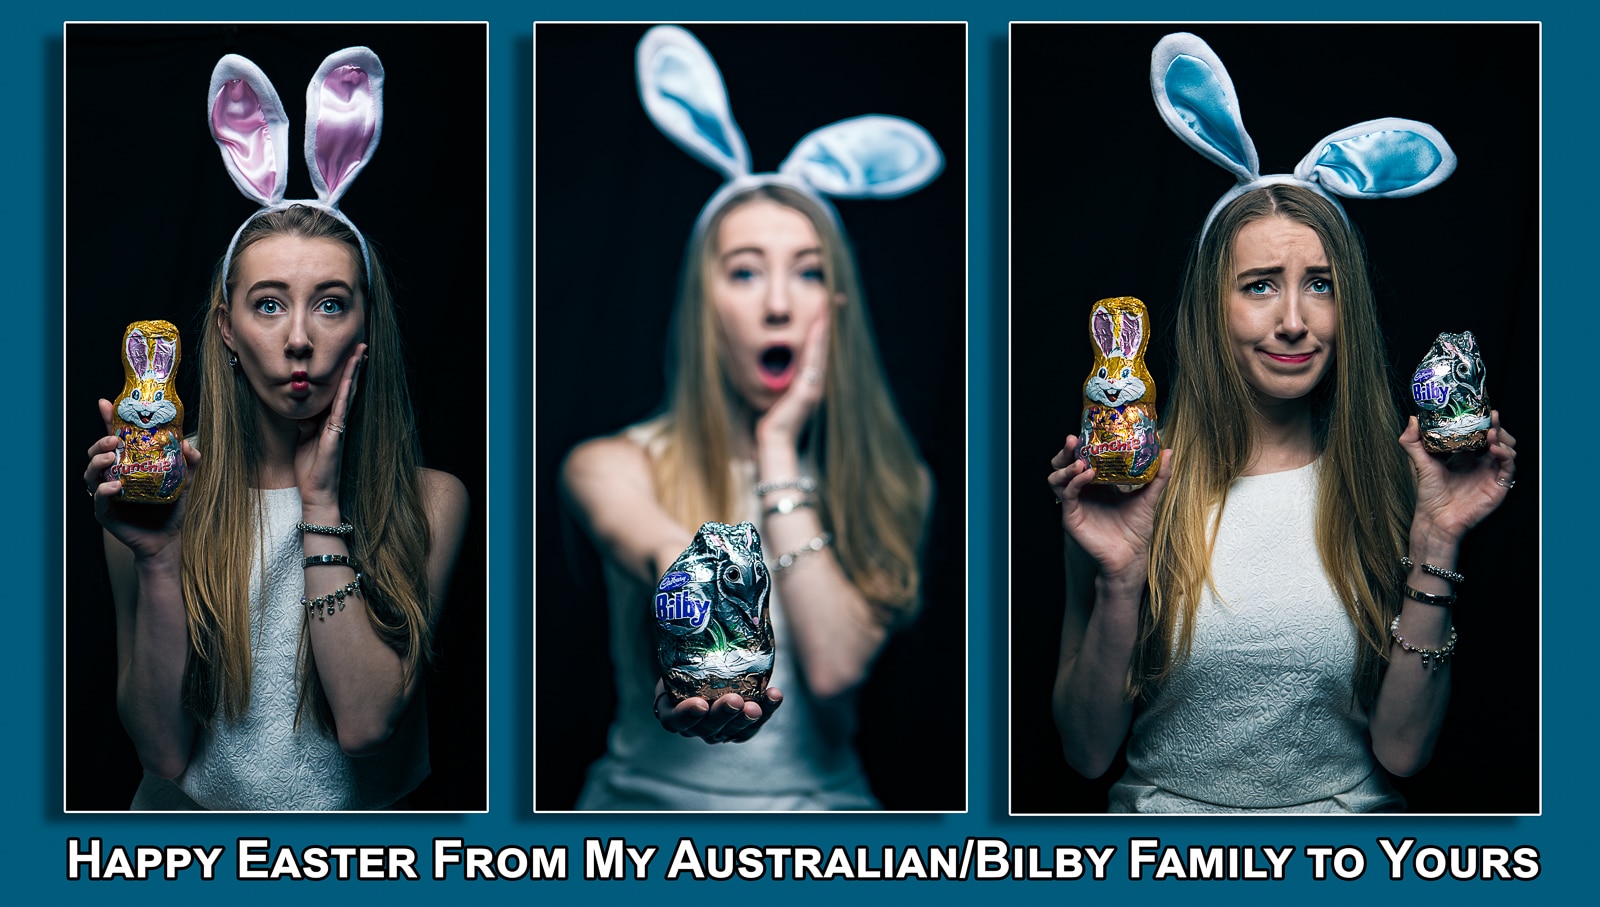 Easter Bunny versus the Australian Bilby